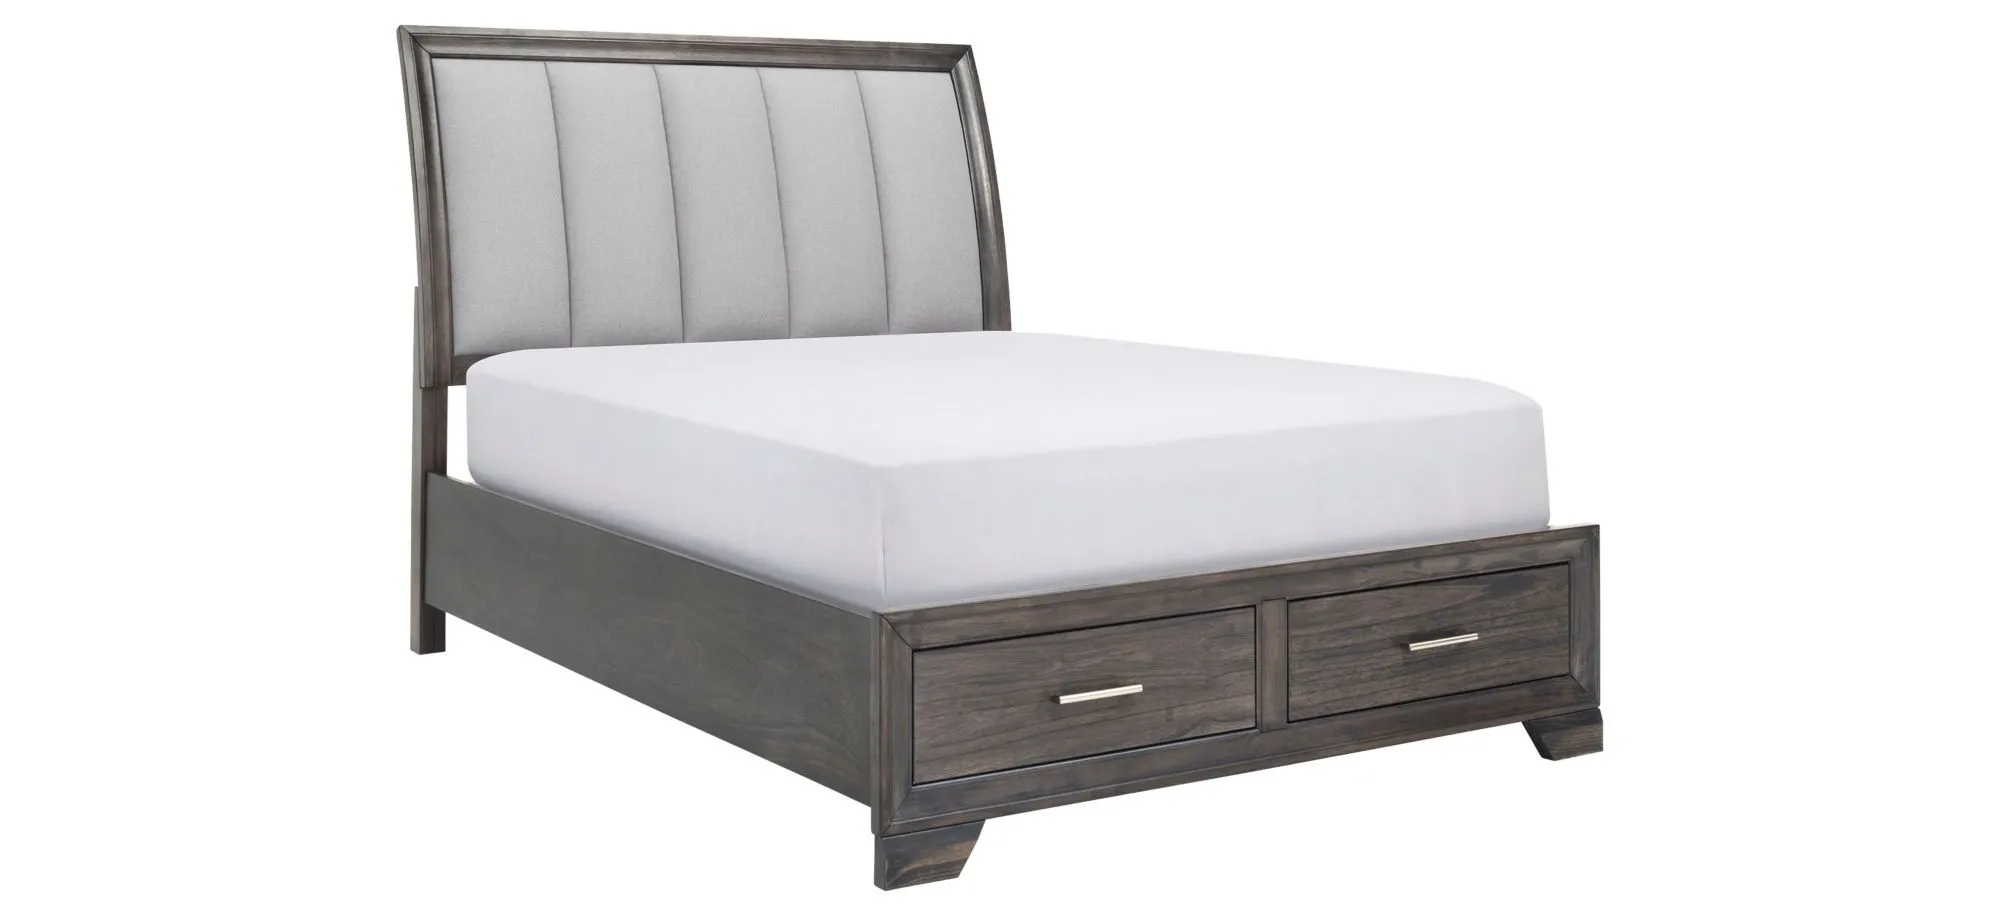 Wegner Storage Bed in Gray by Crown Mark